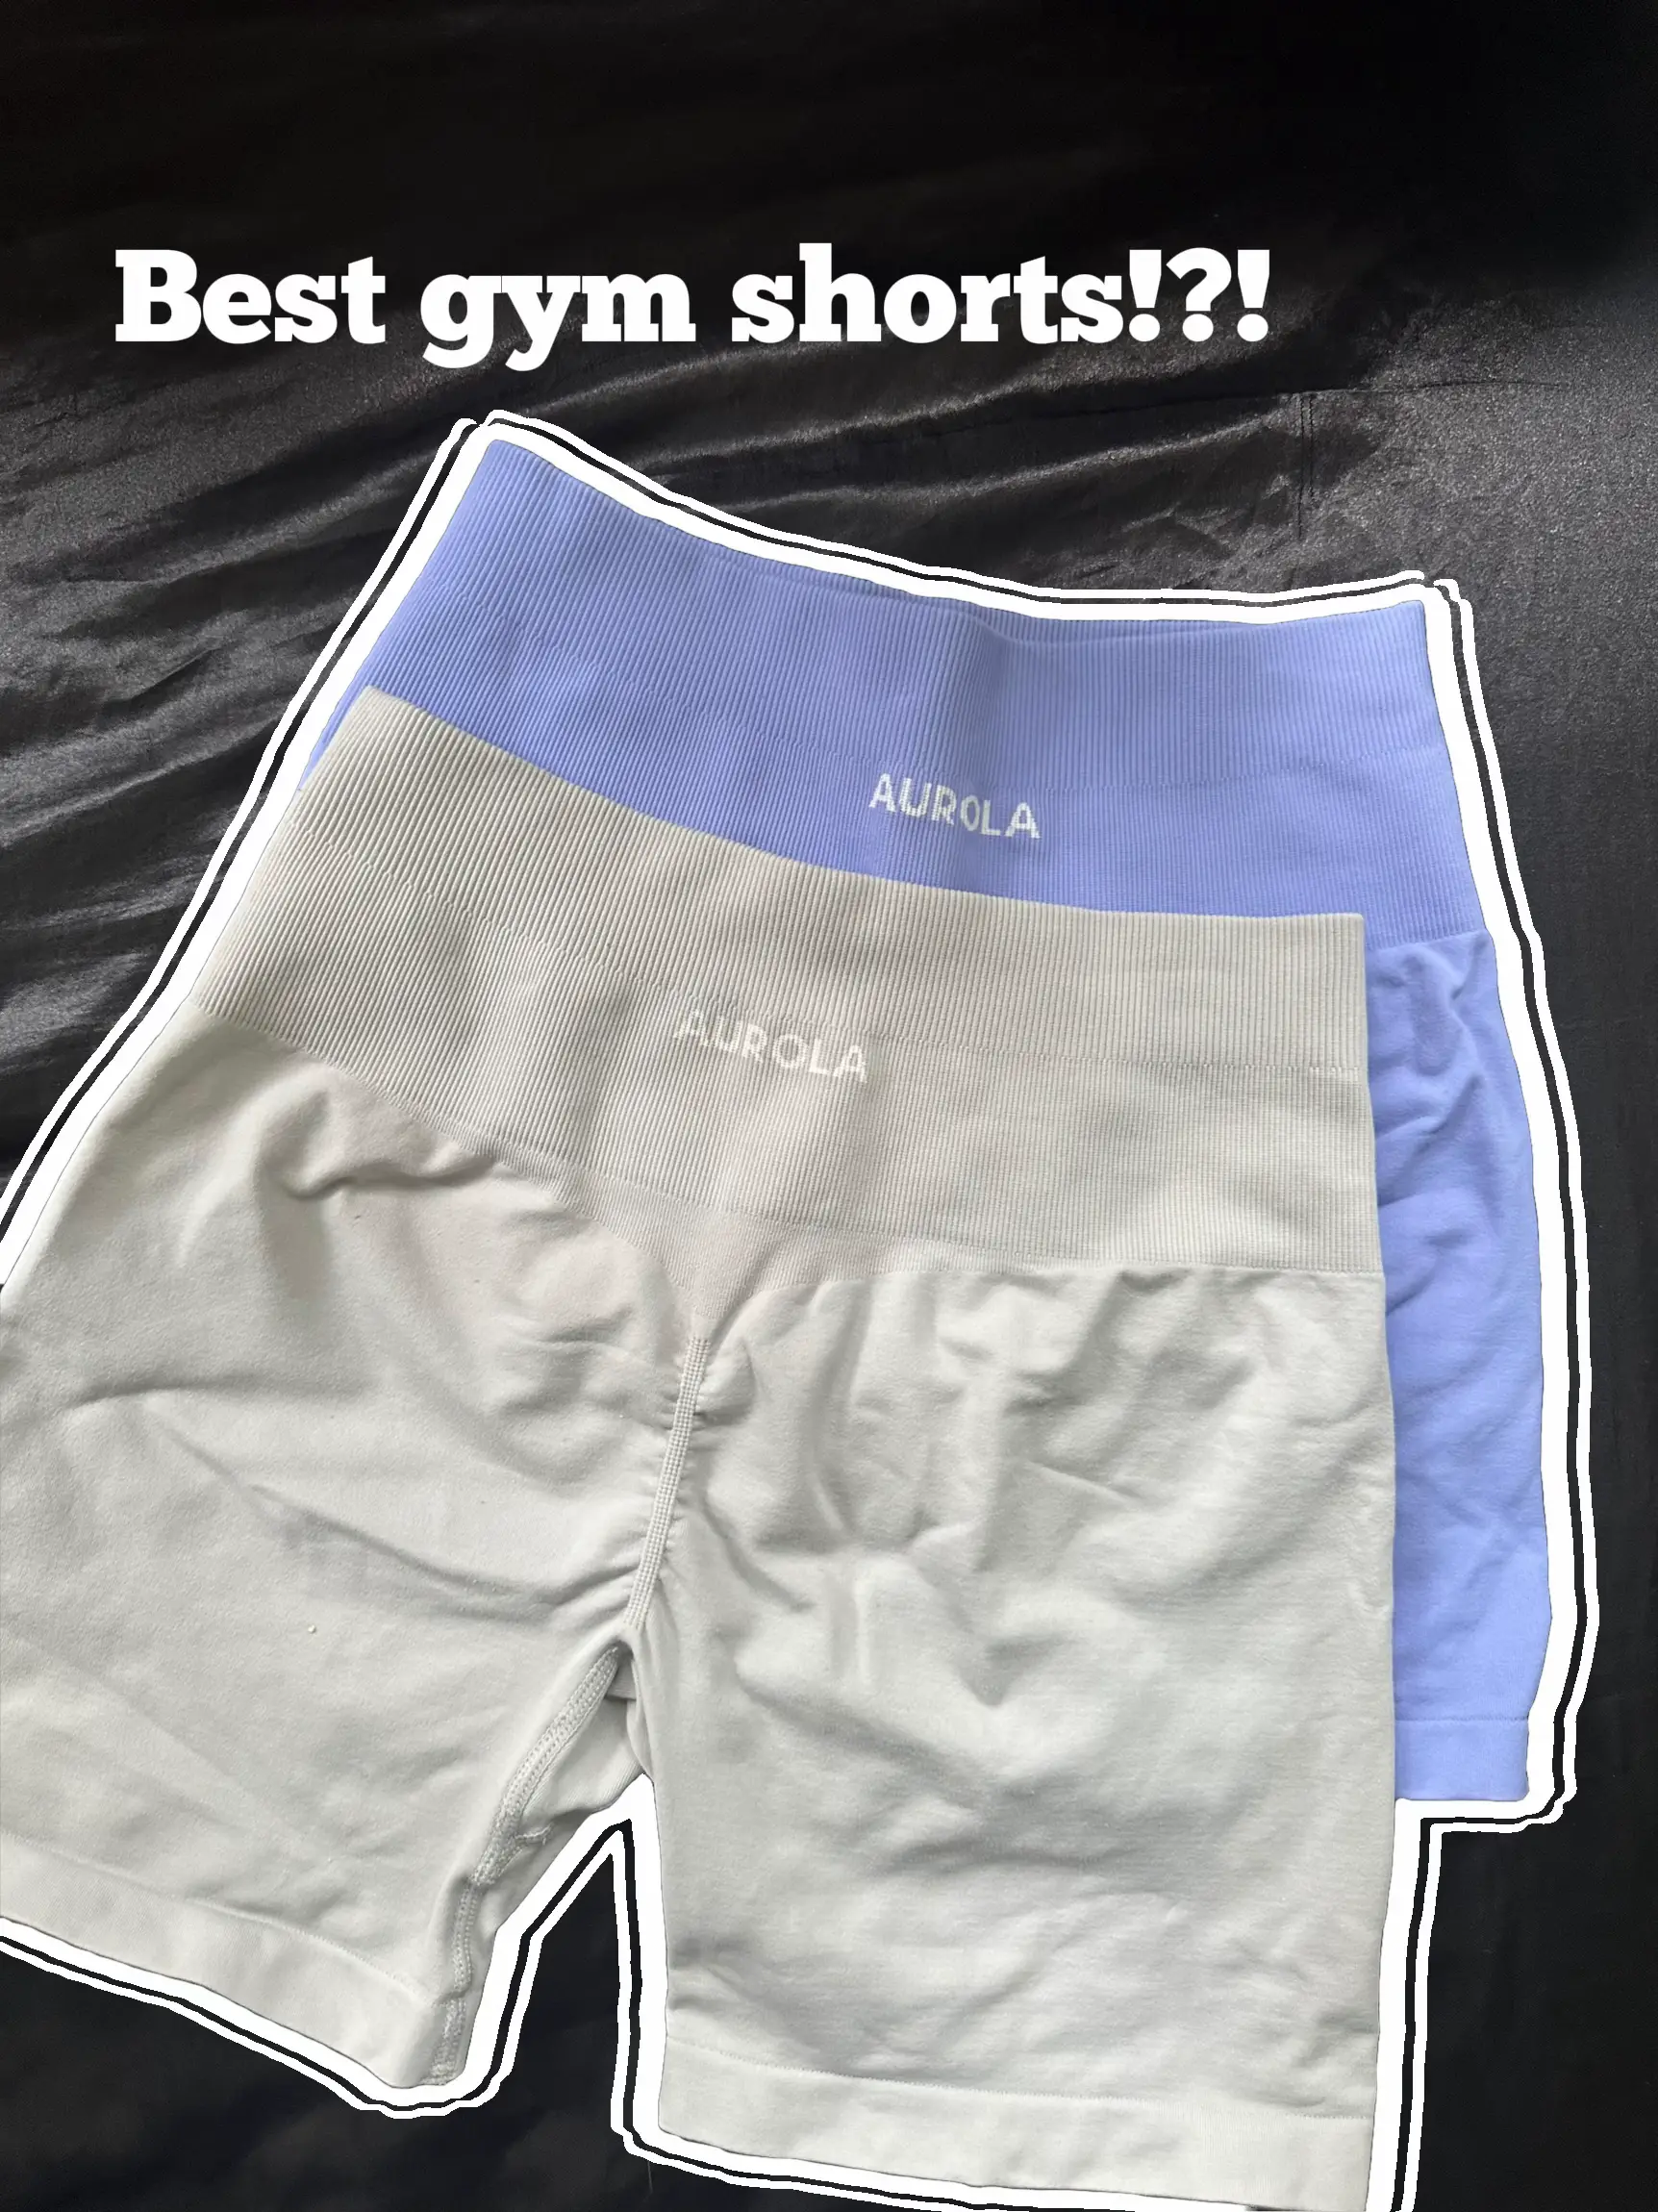 aurola gym shorts｜TikTok Search